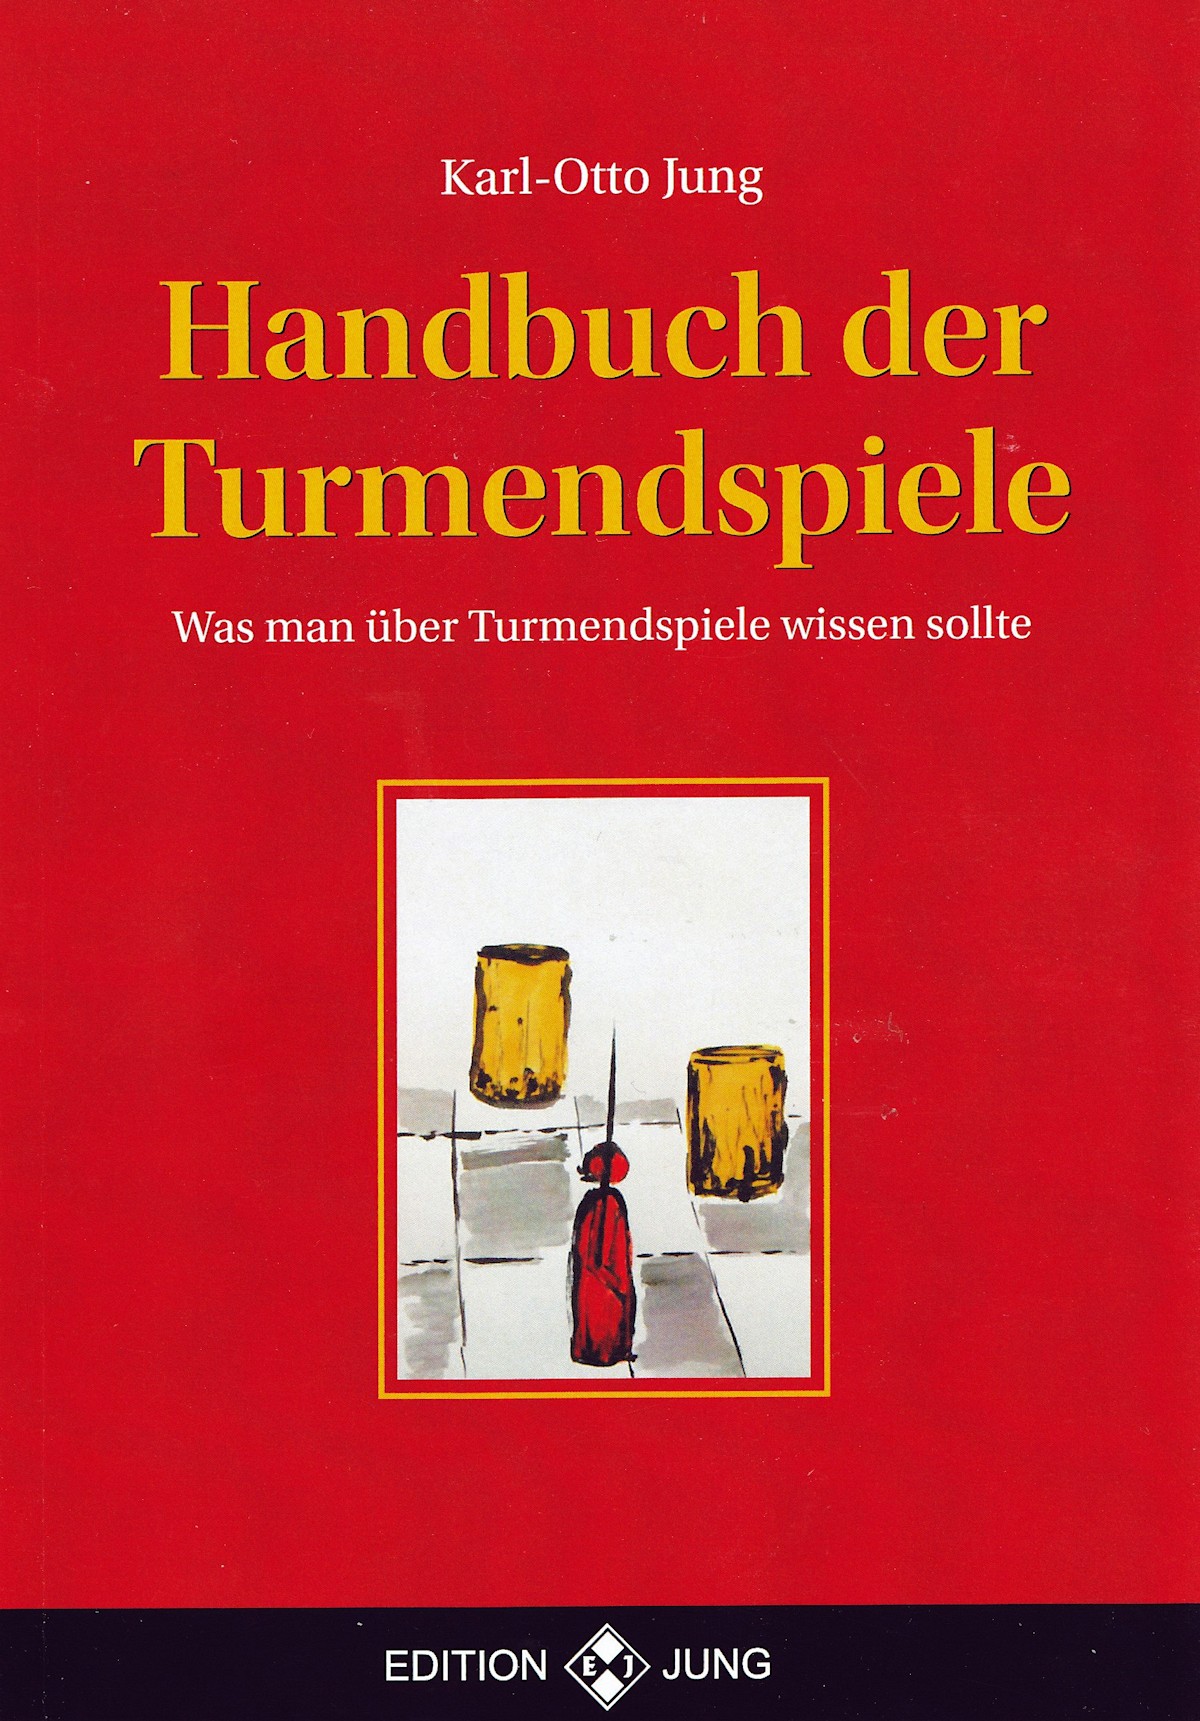 Handbuch der Turmendspiele